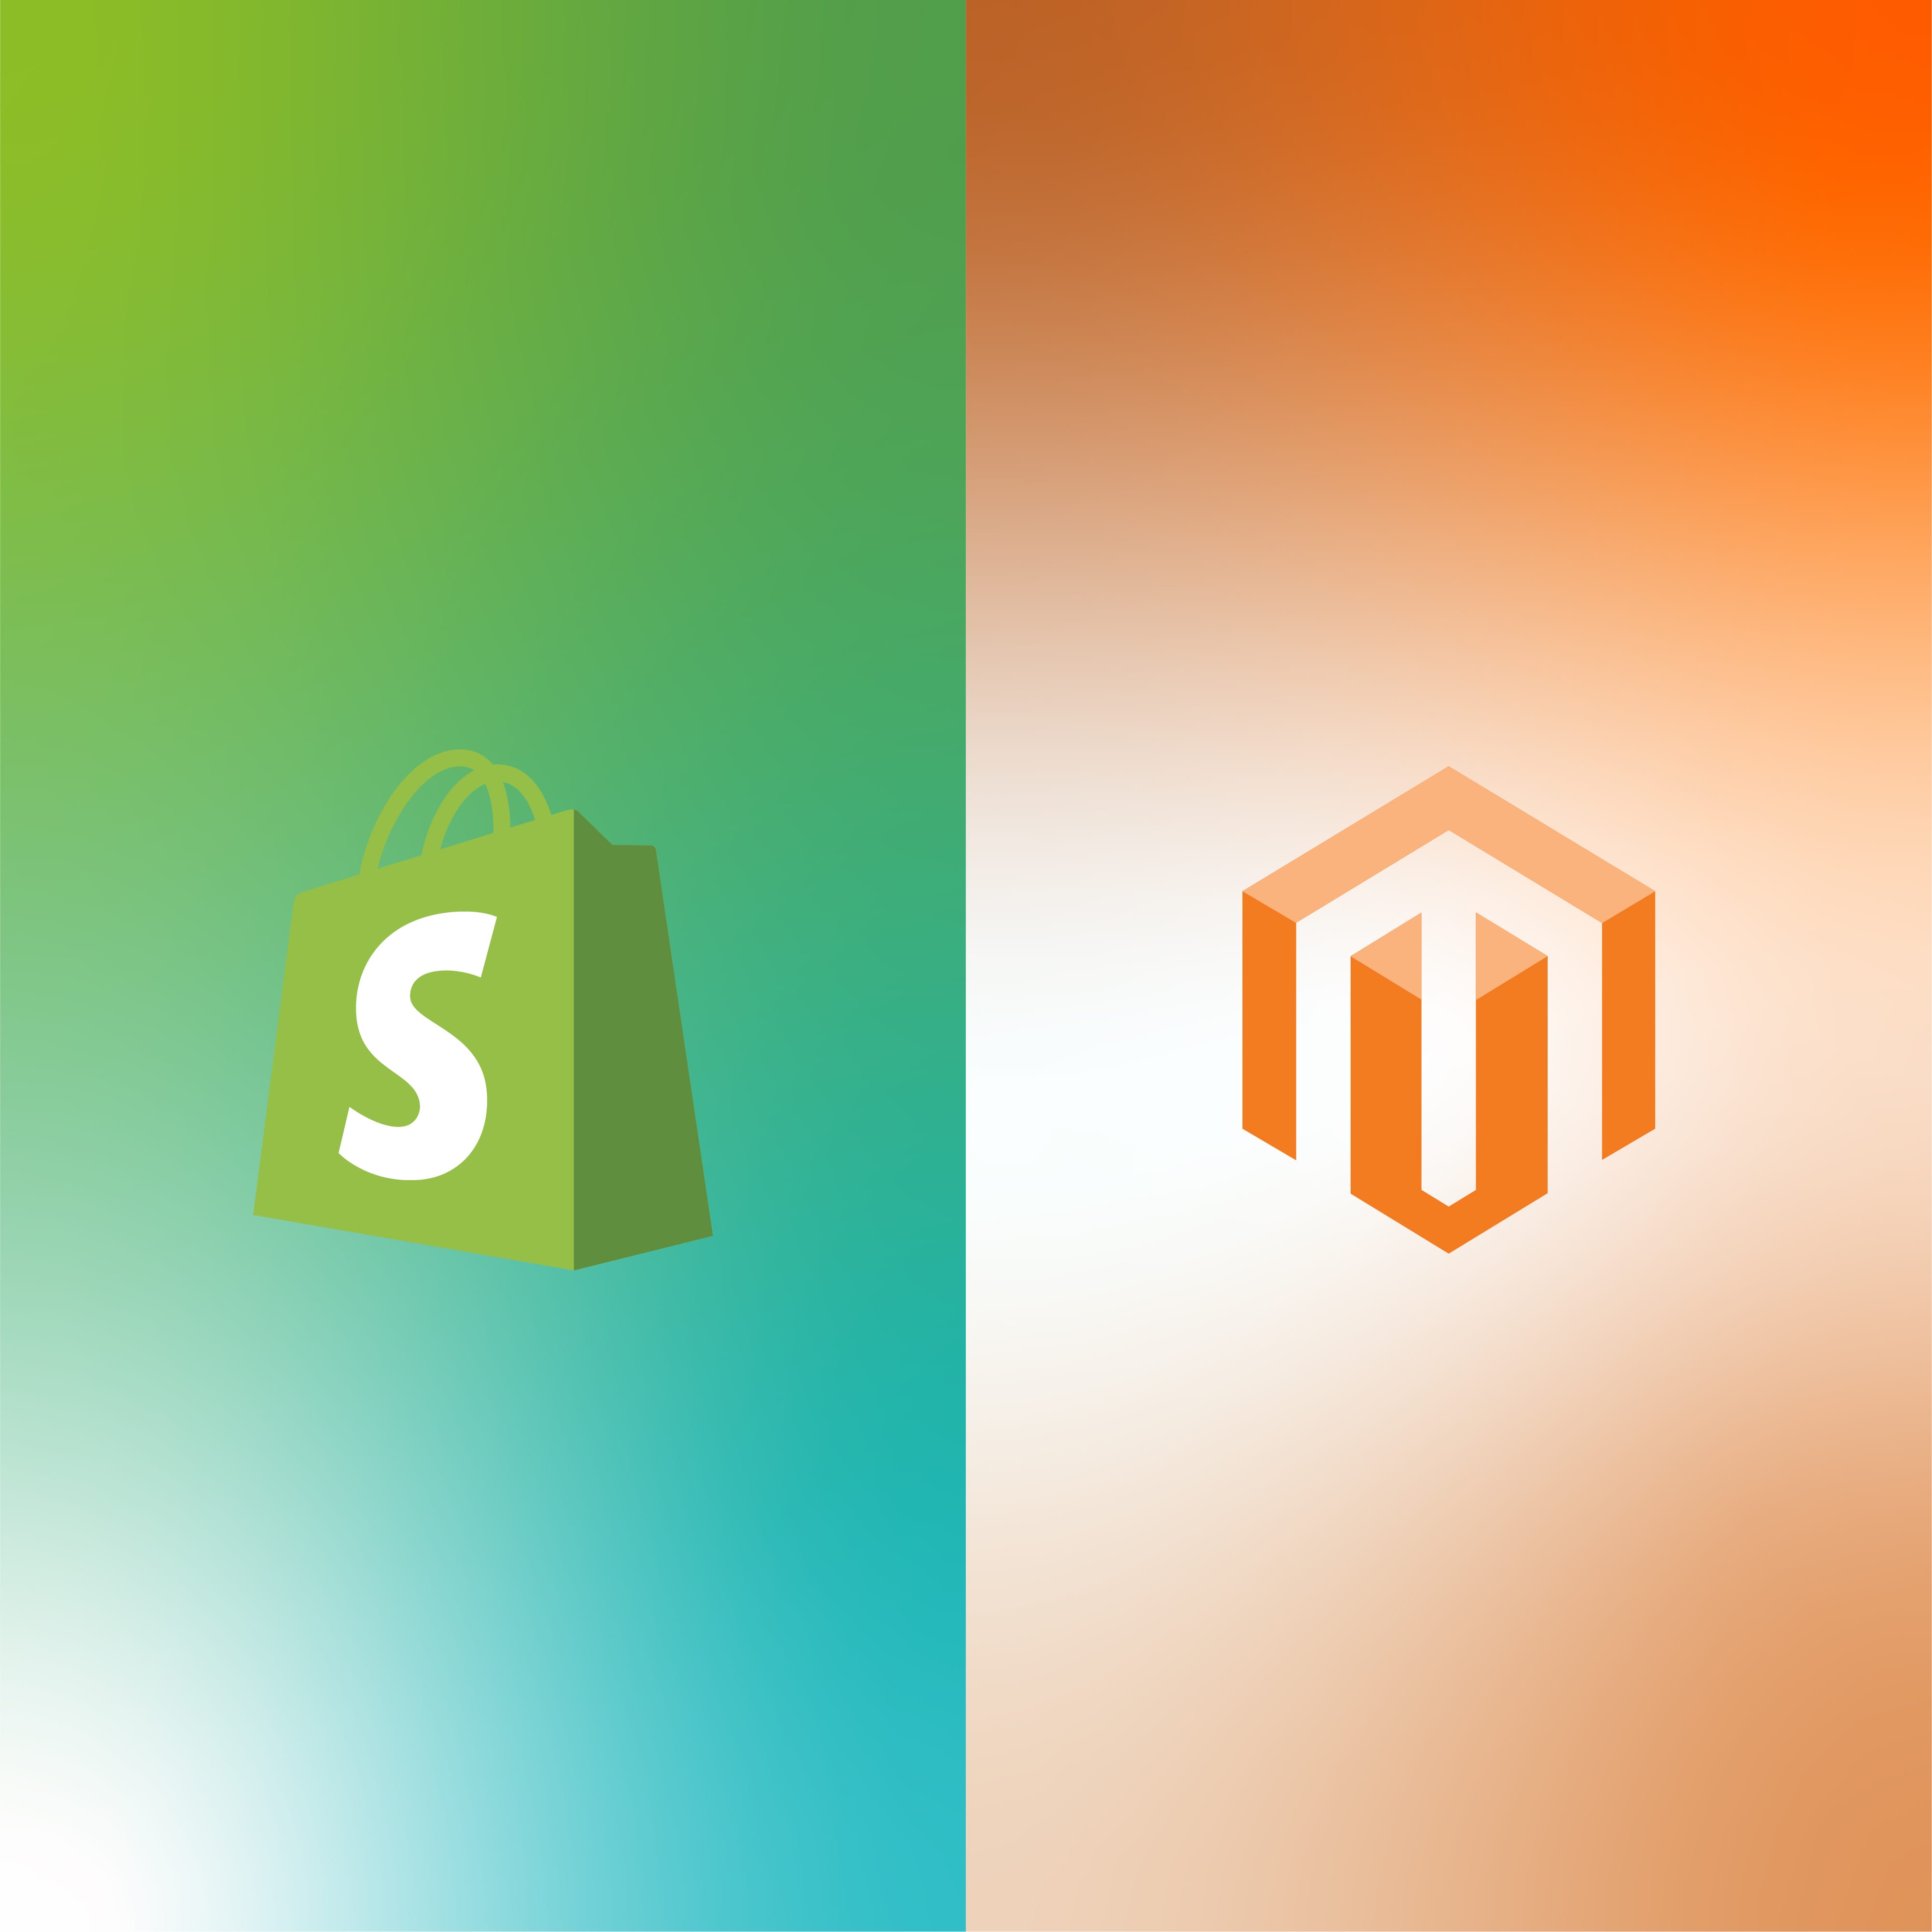 Shopify and Magento Magic through the Lens of Web Development